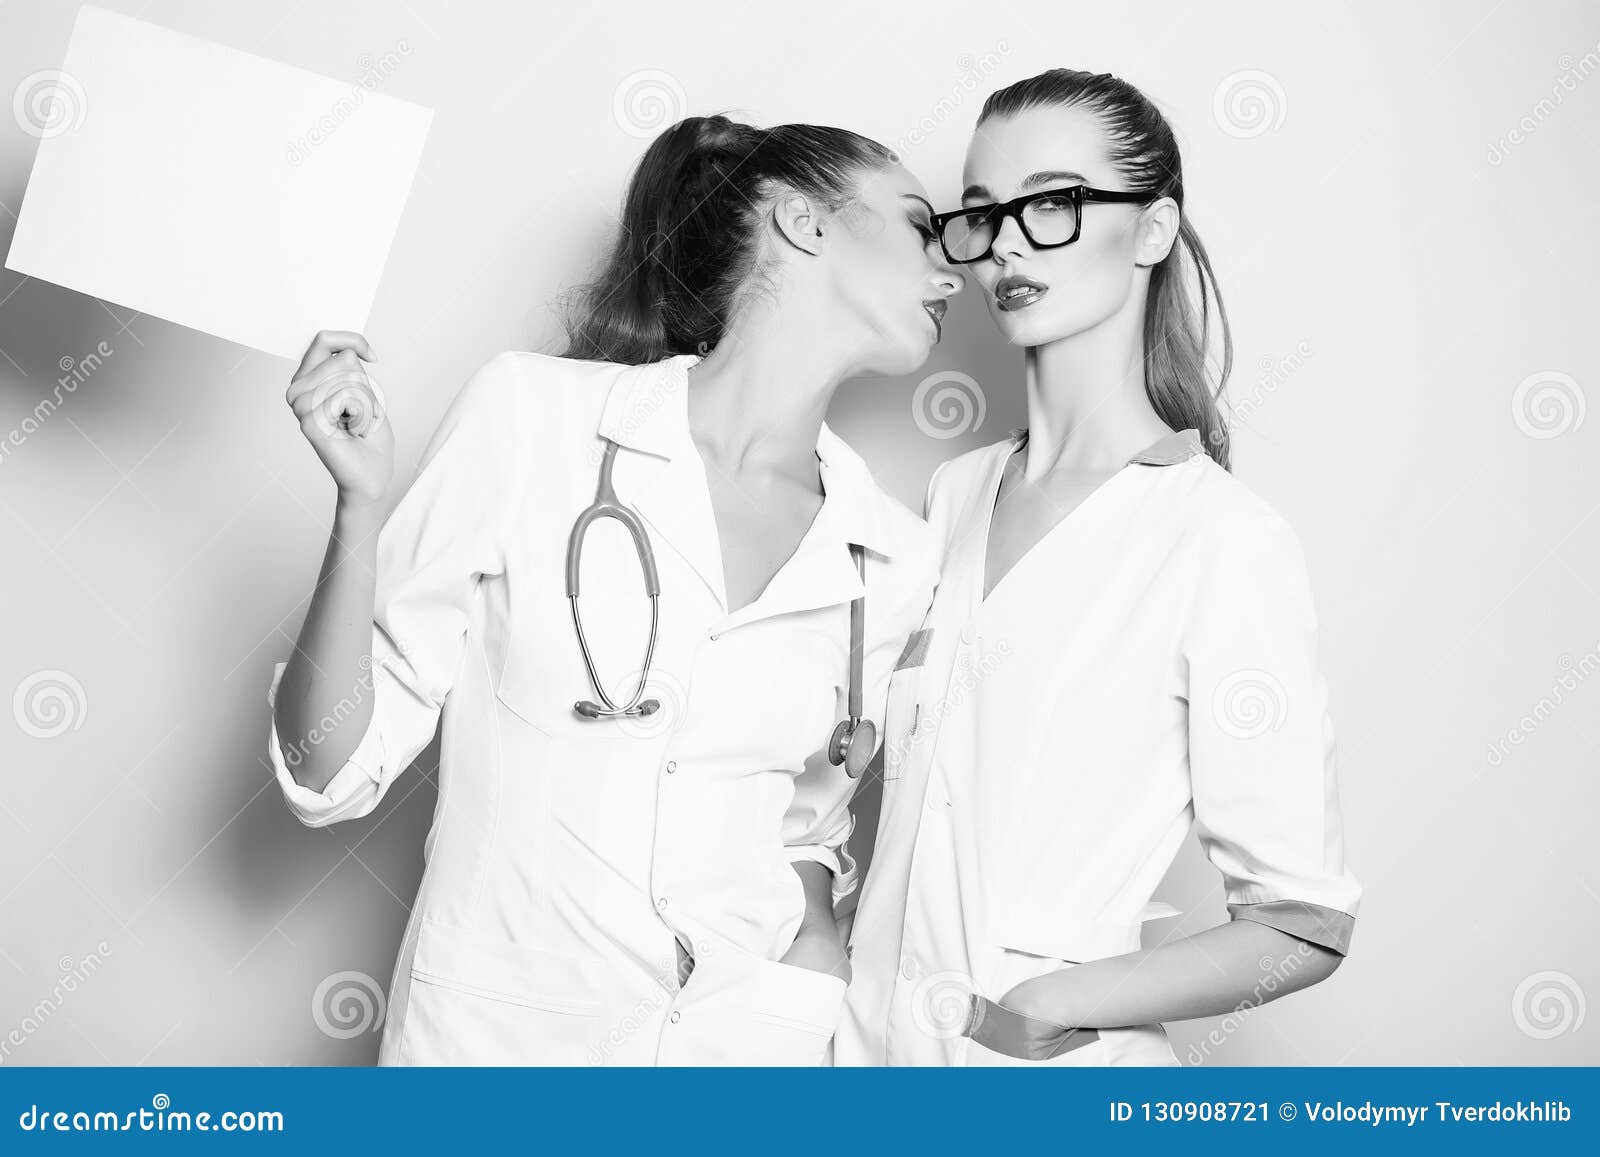 Nurse lesbian